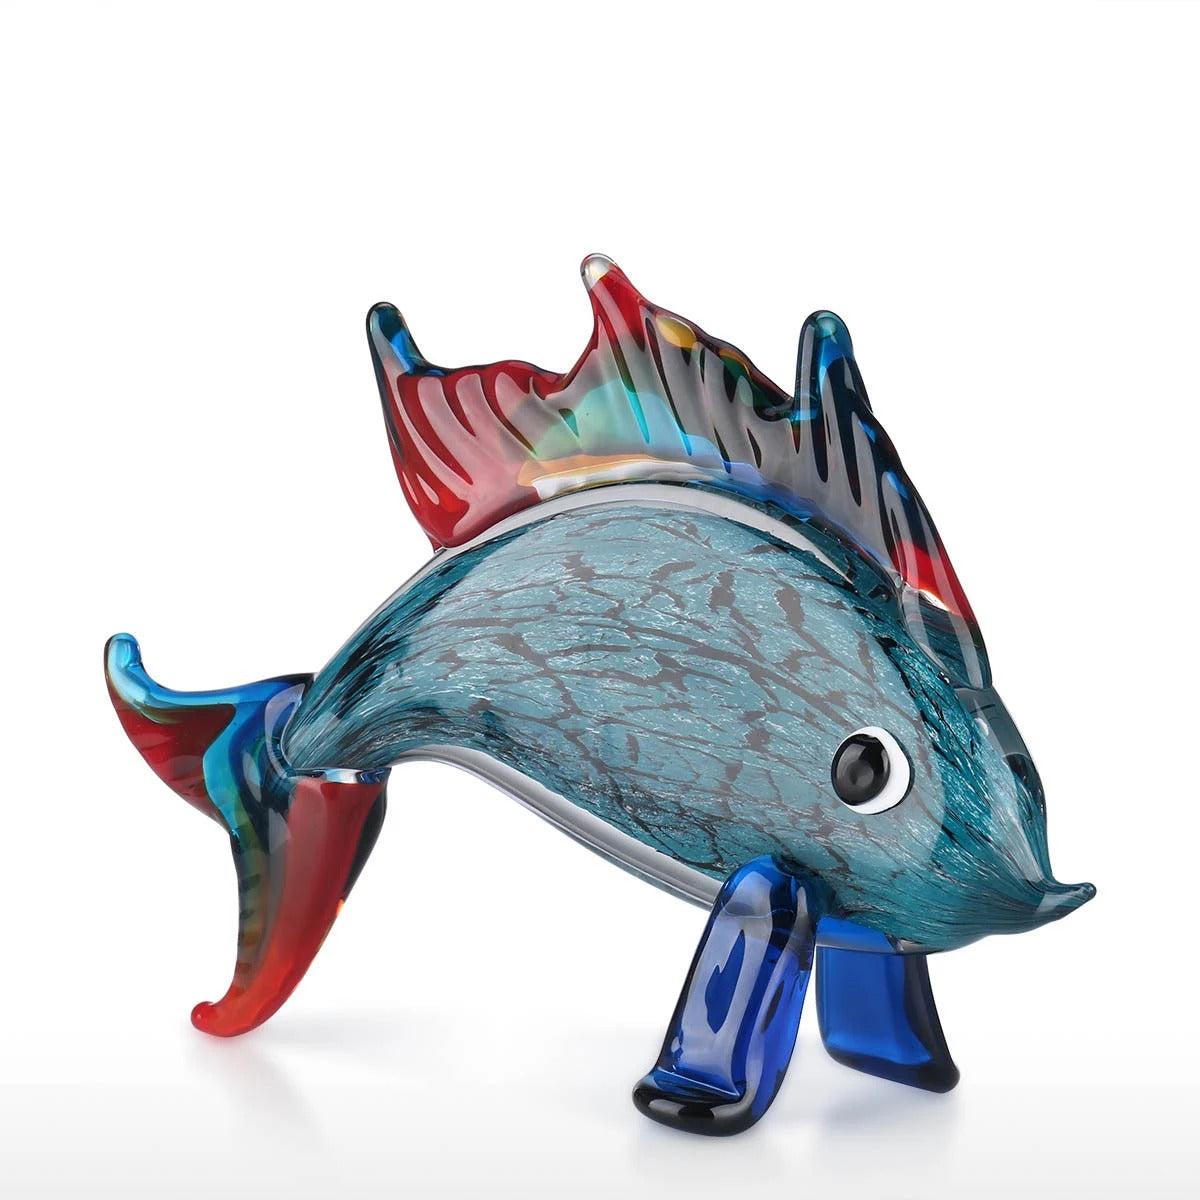 Aquarium Decor and Fish Tank Ornaments with Dolphin Fish